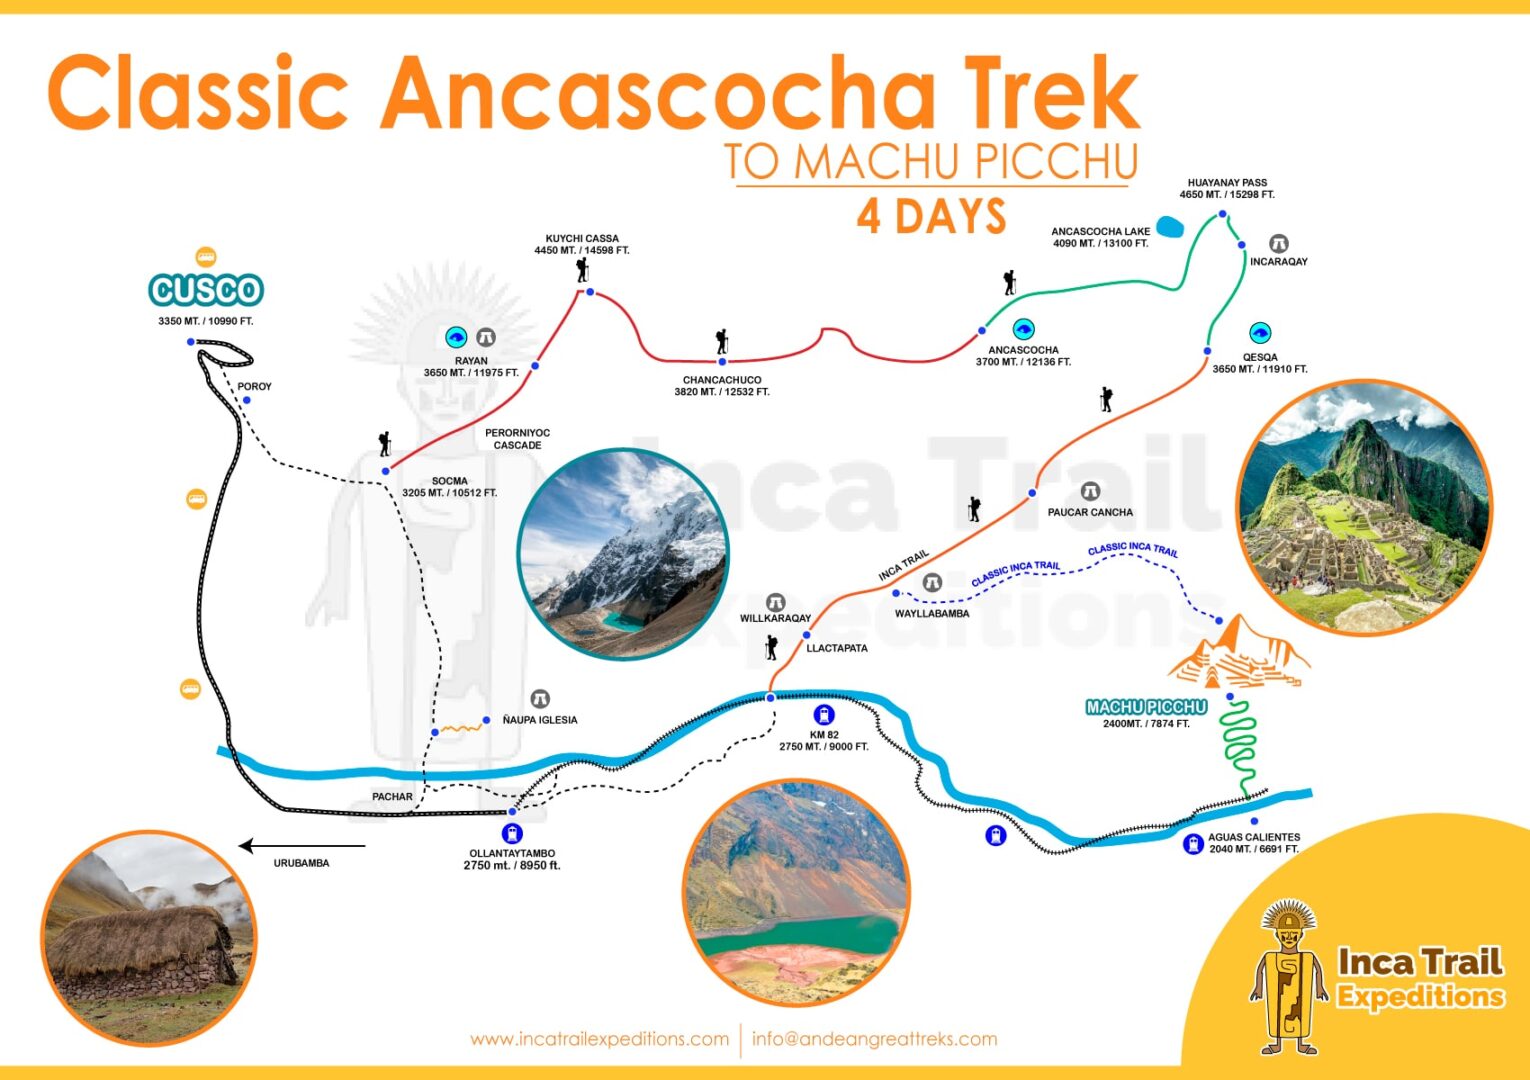 ANCASCOCHA-TREK-TO-MACHUPICCHU-4-DAYS-BY-INCA-TRAIL-EXPEDITIONS